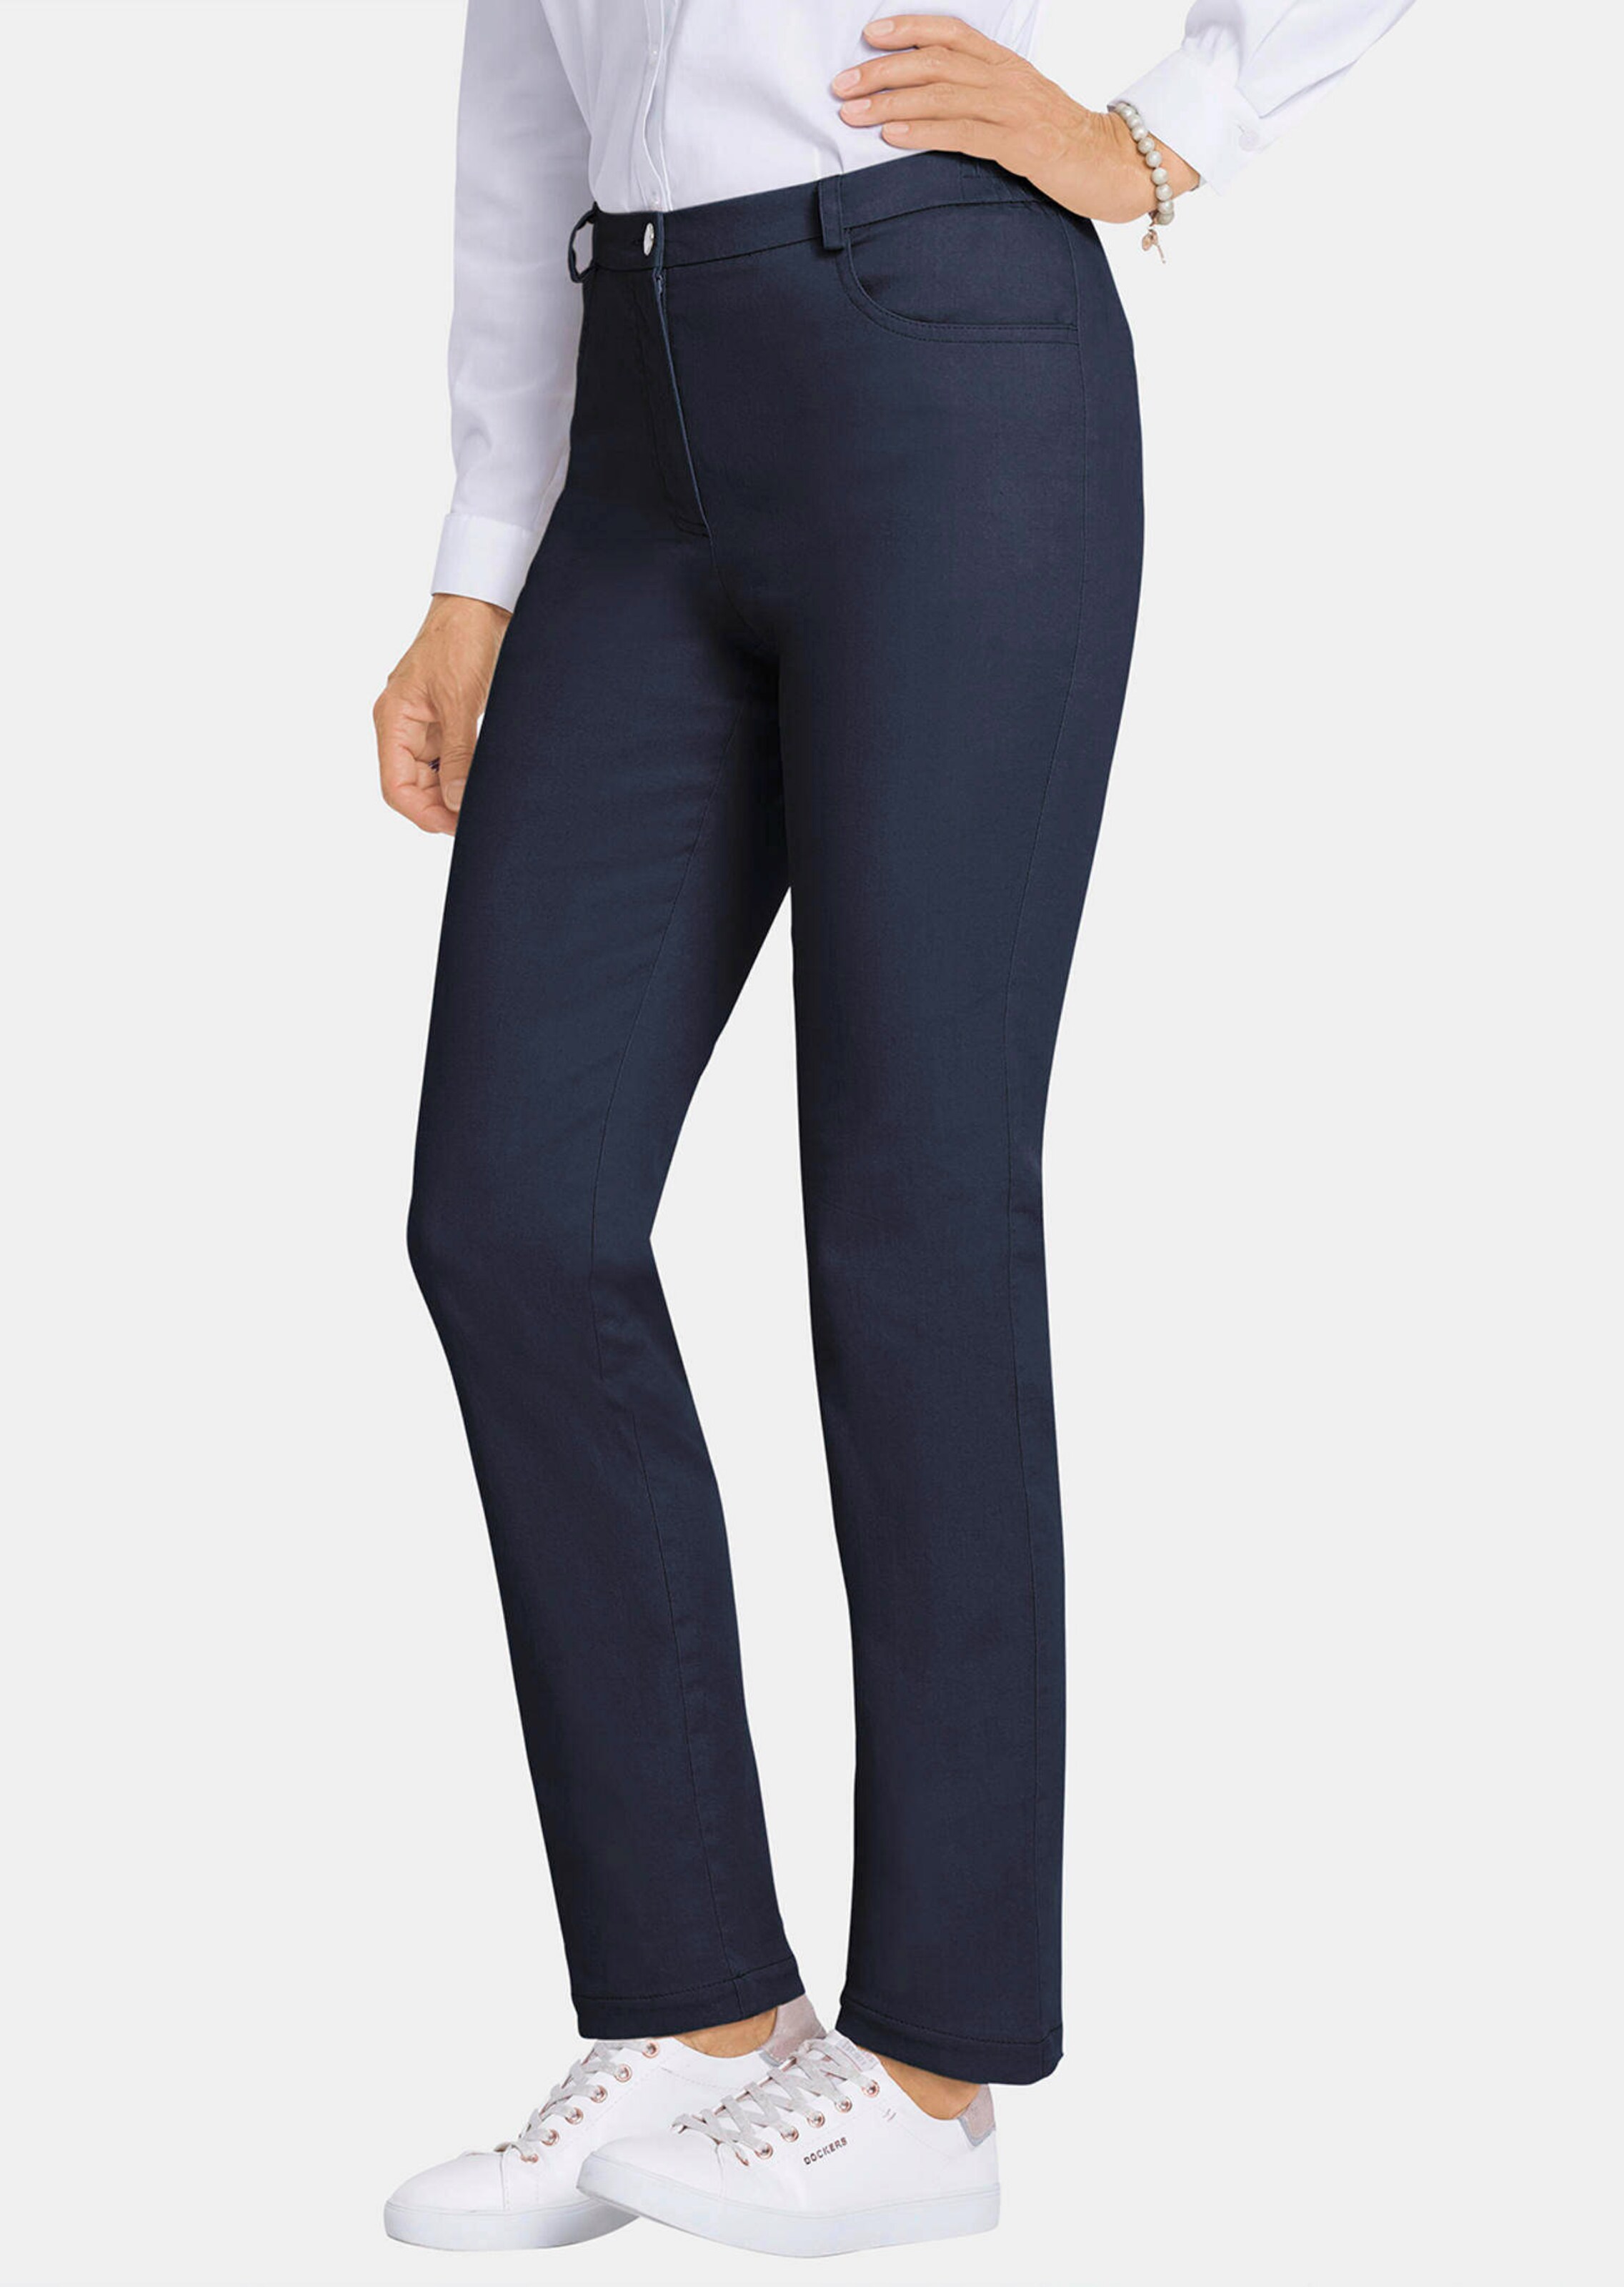 Goldner Fashion Sportieve jeans Carla - donkerblauw 